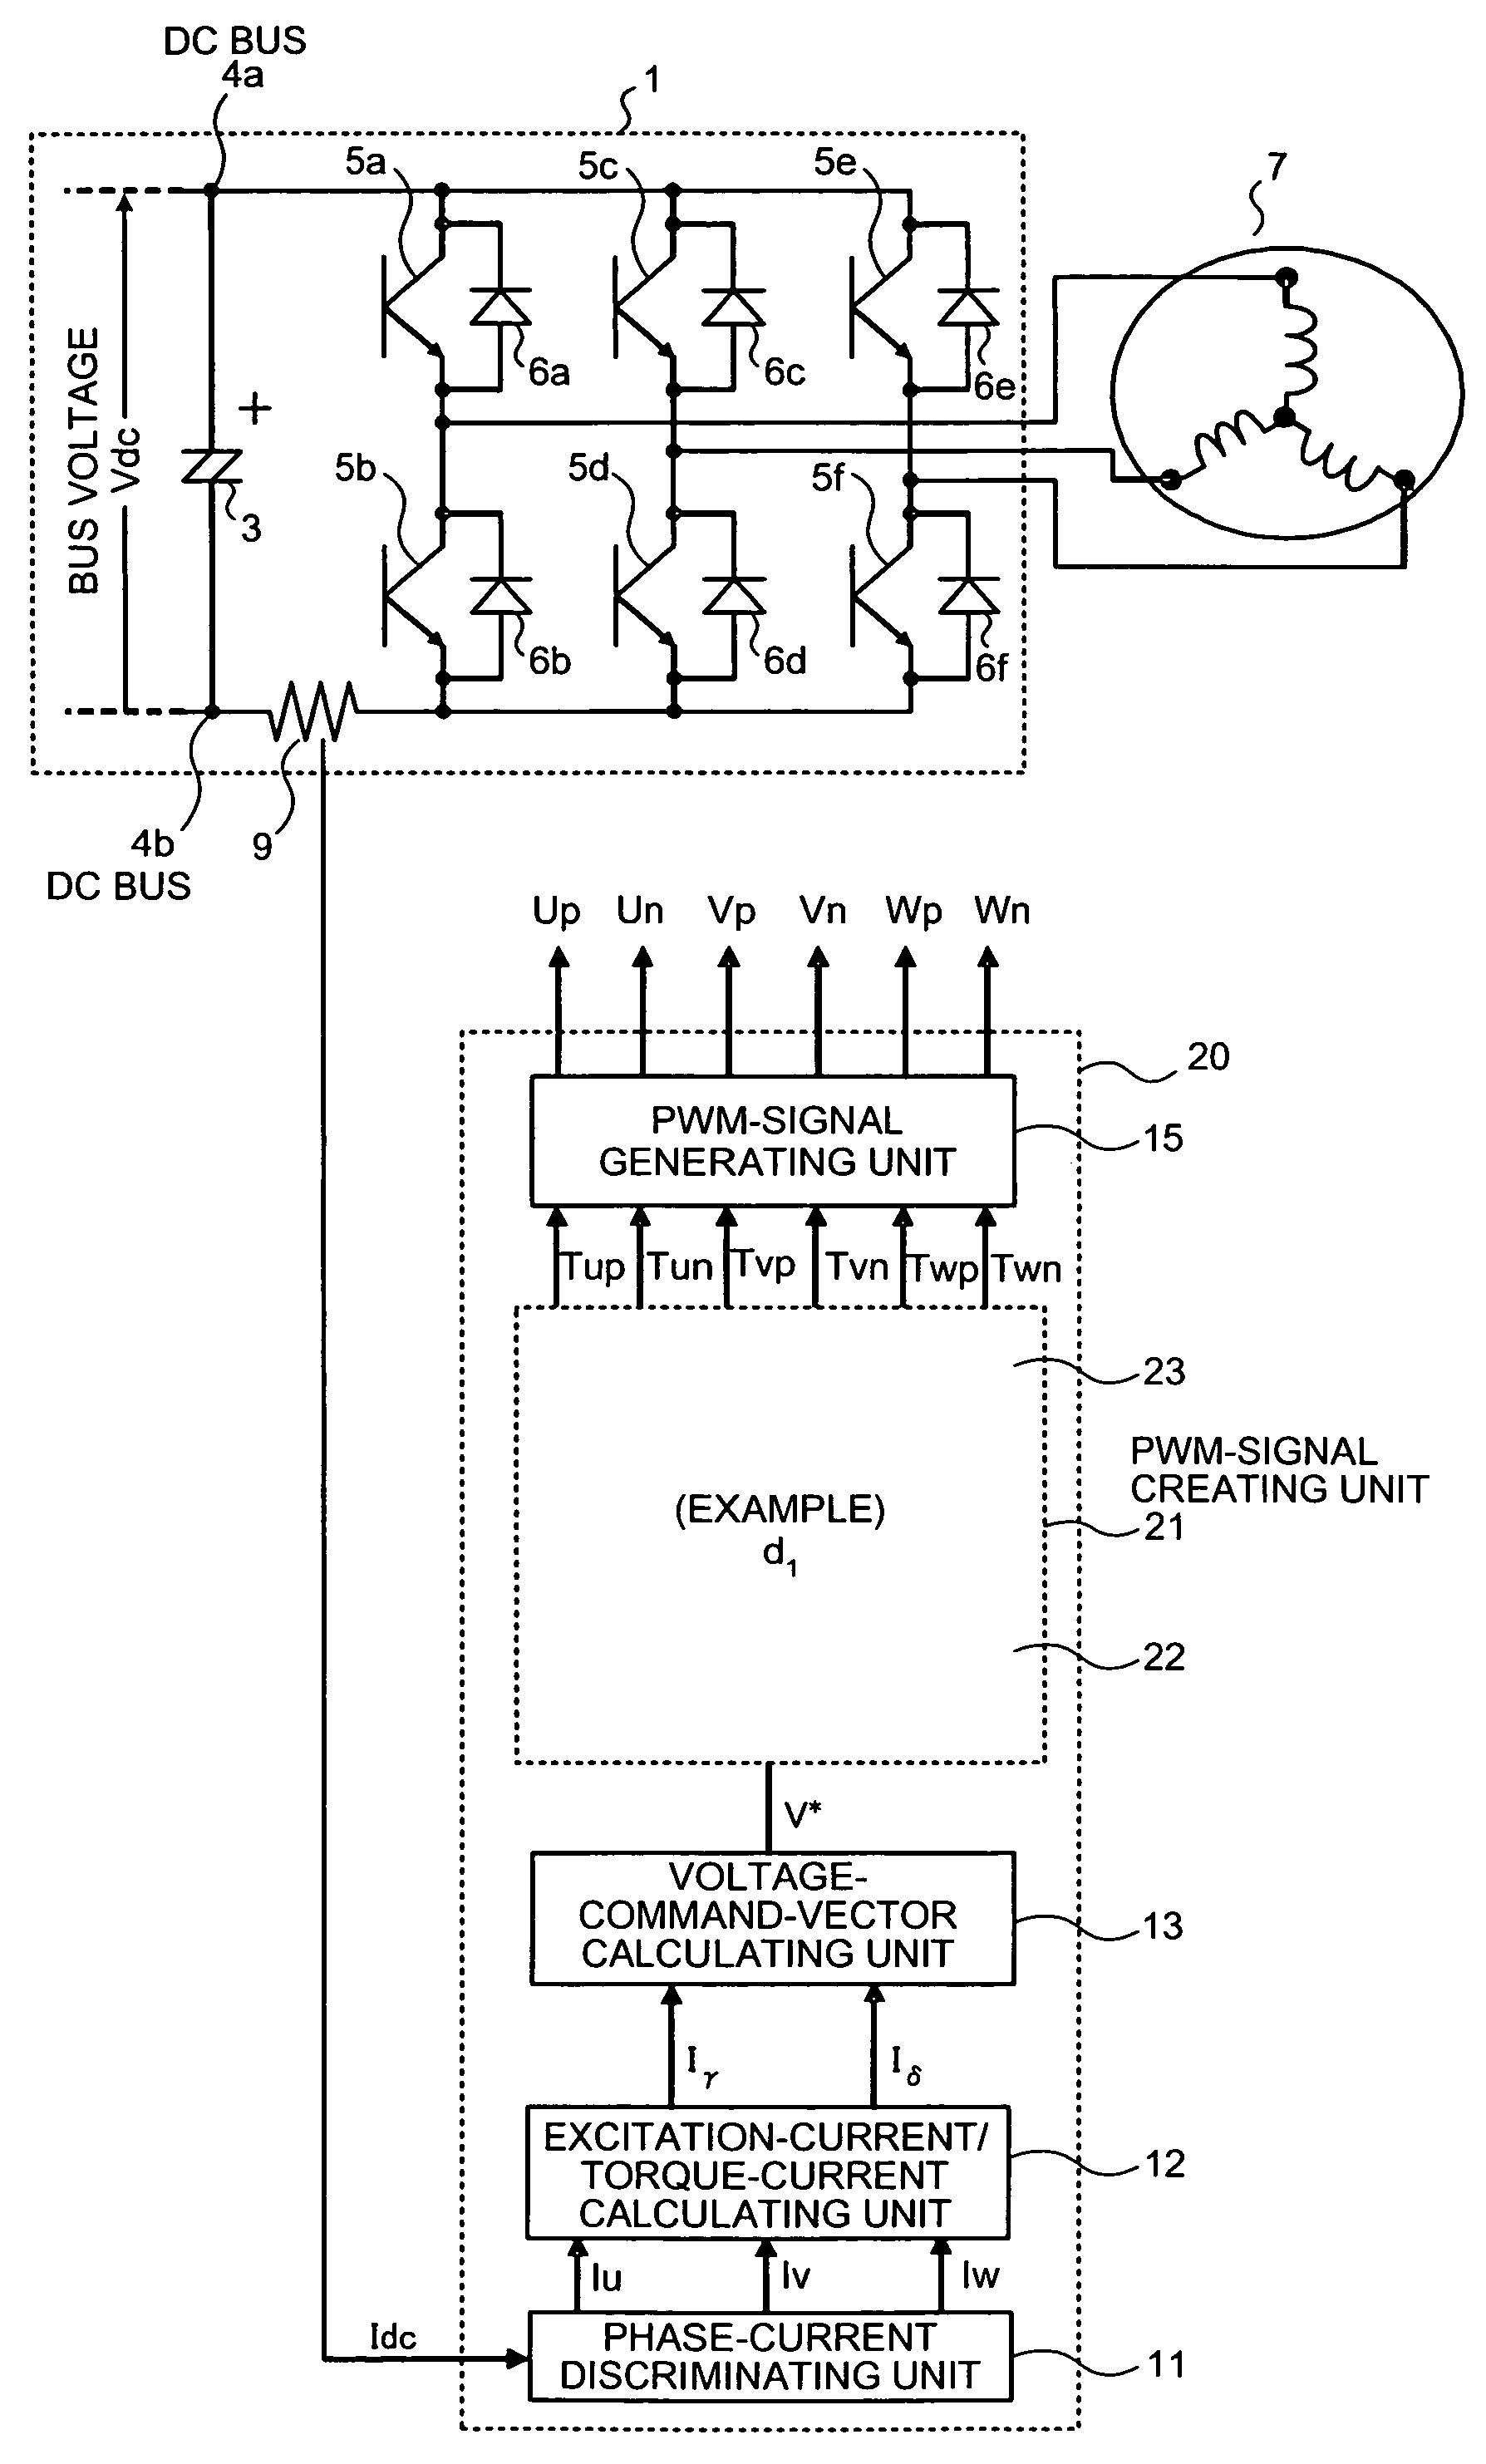 Three-phase PWM-signal generating apparatus